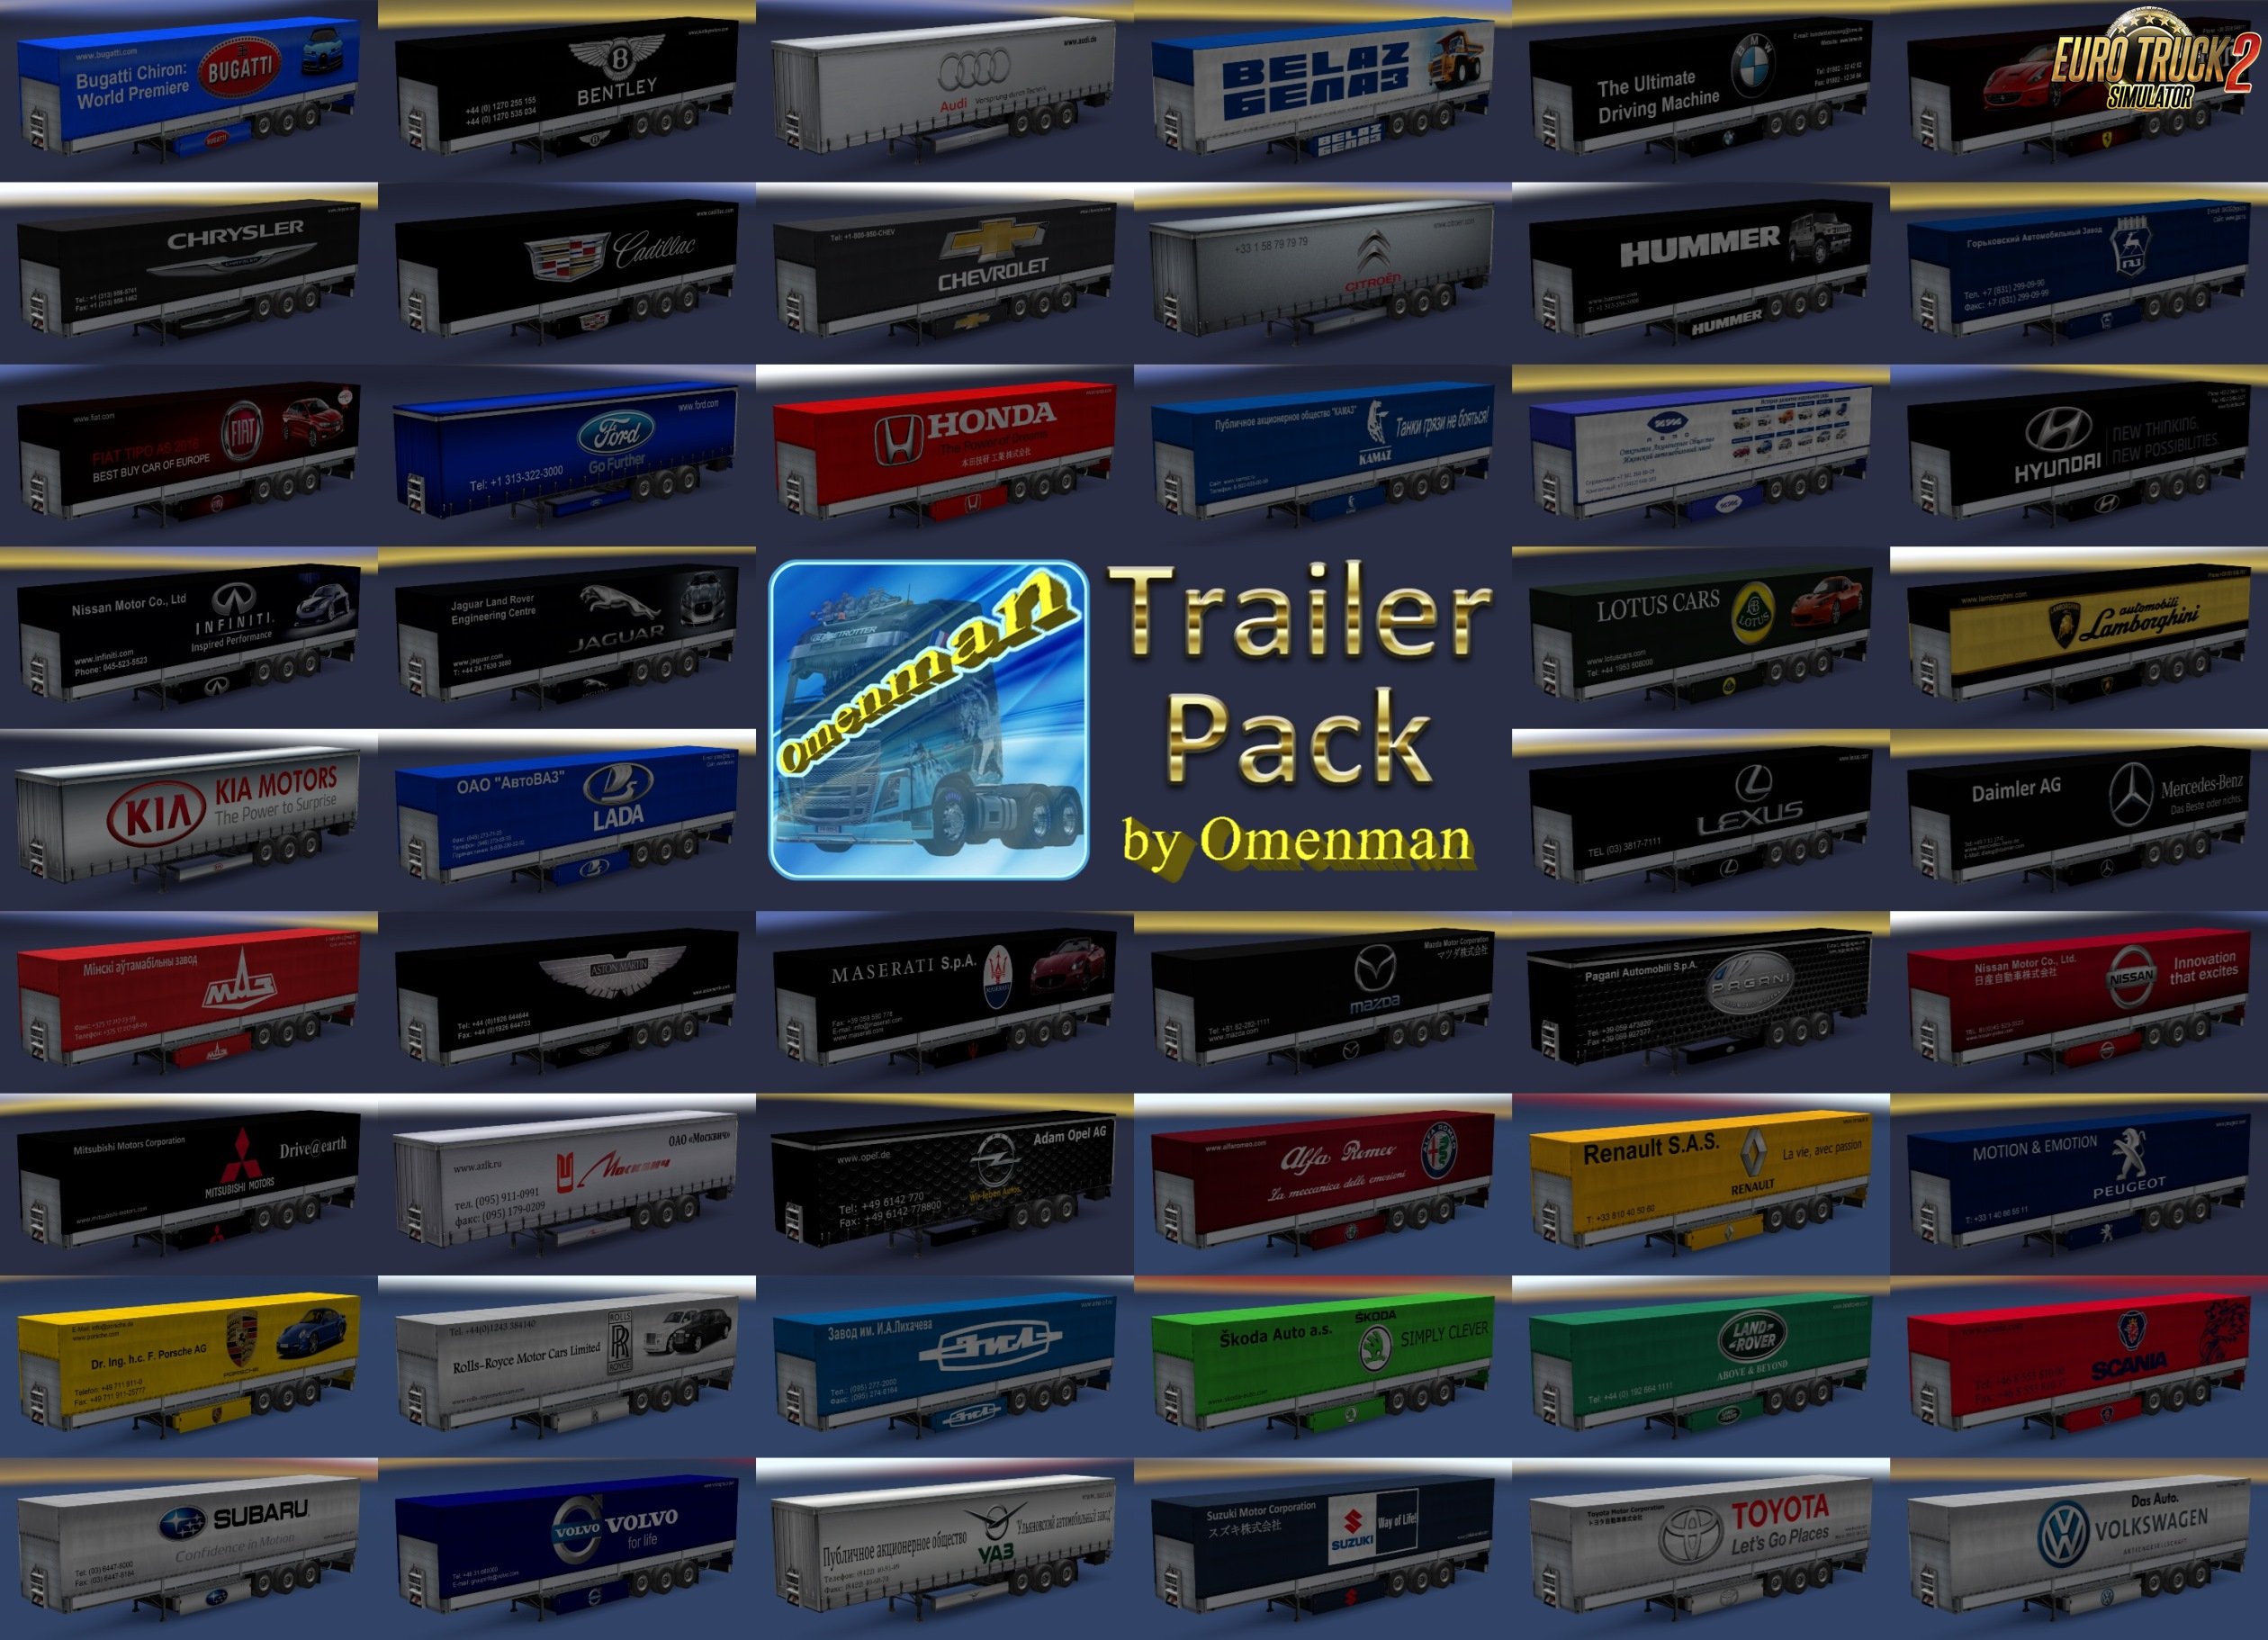 Trailer Pack Cars v.1.02.00 for Ets2